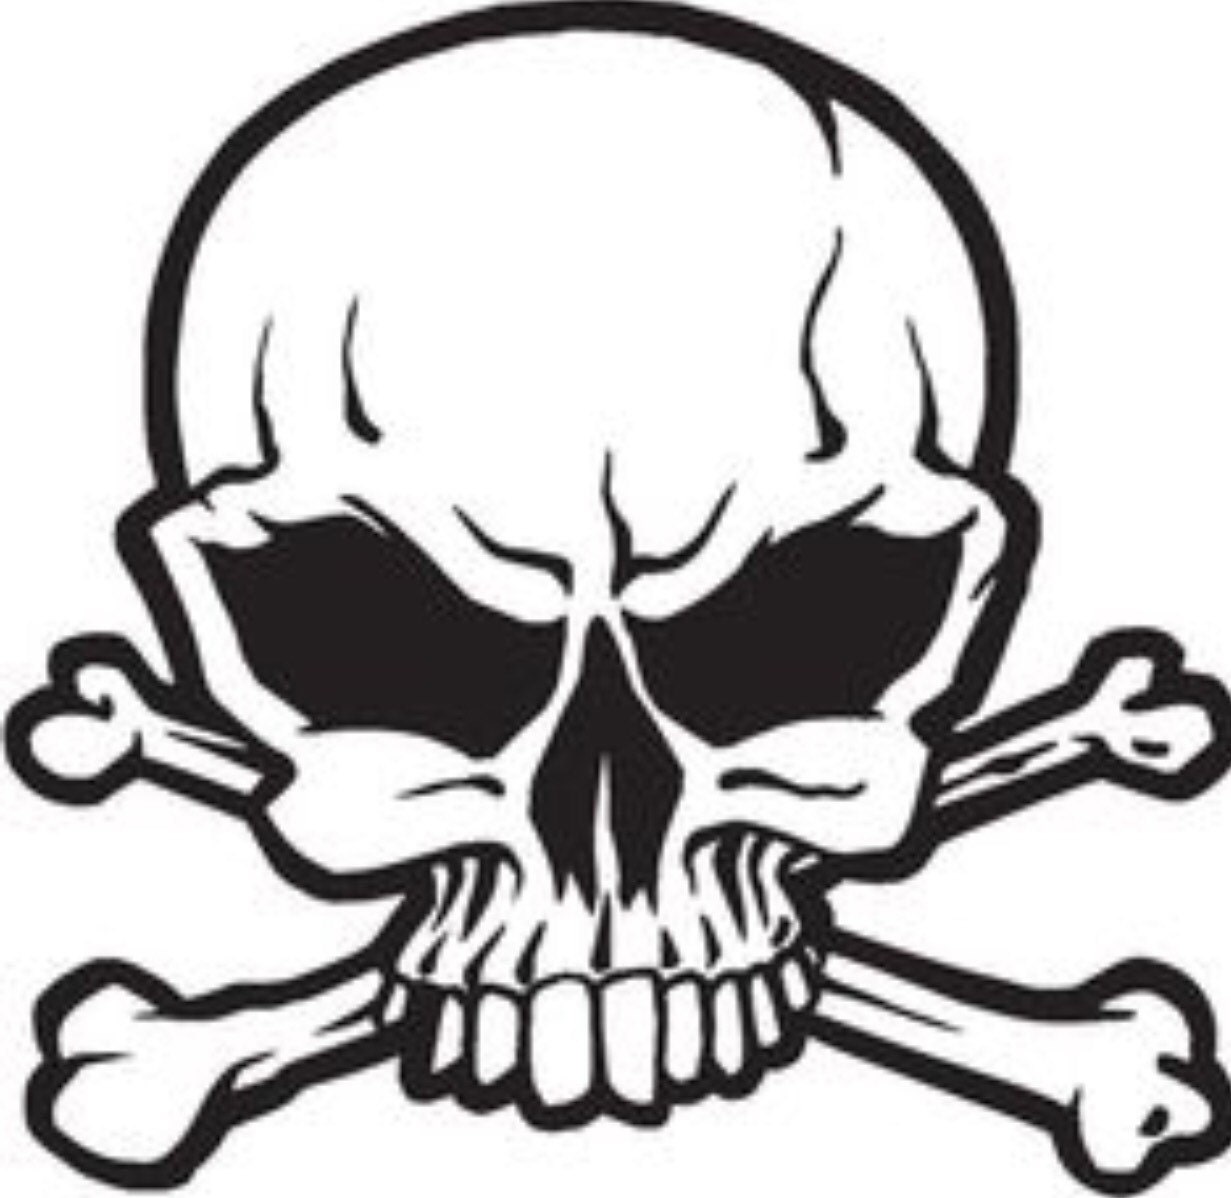 skull and bones logo